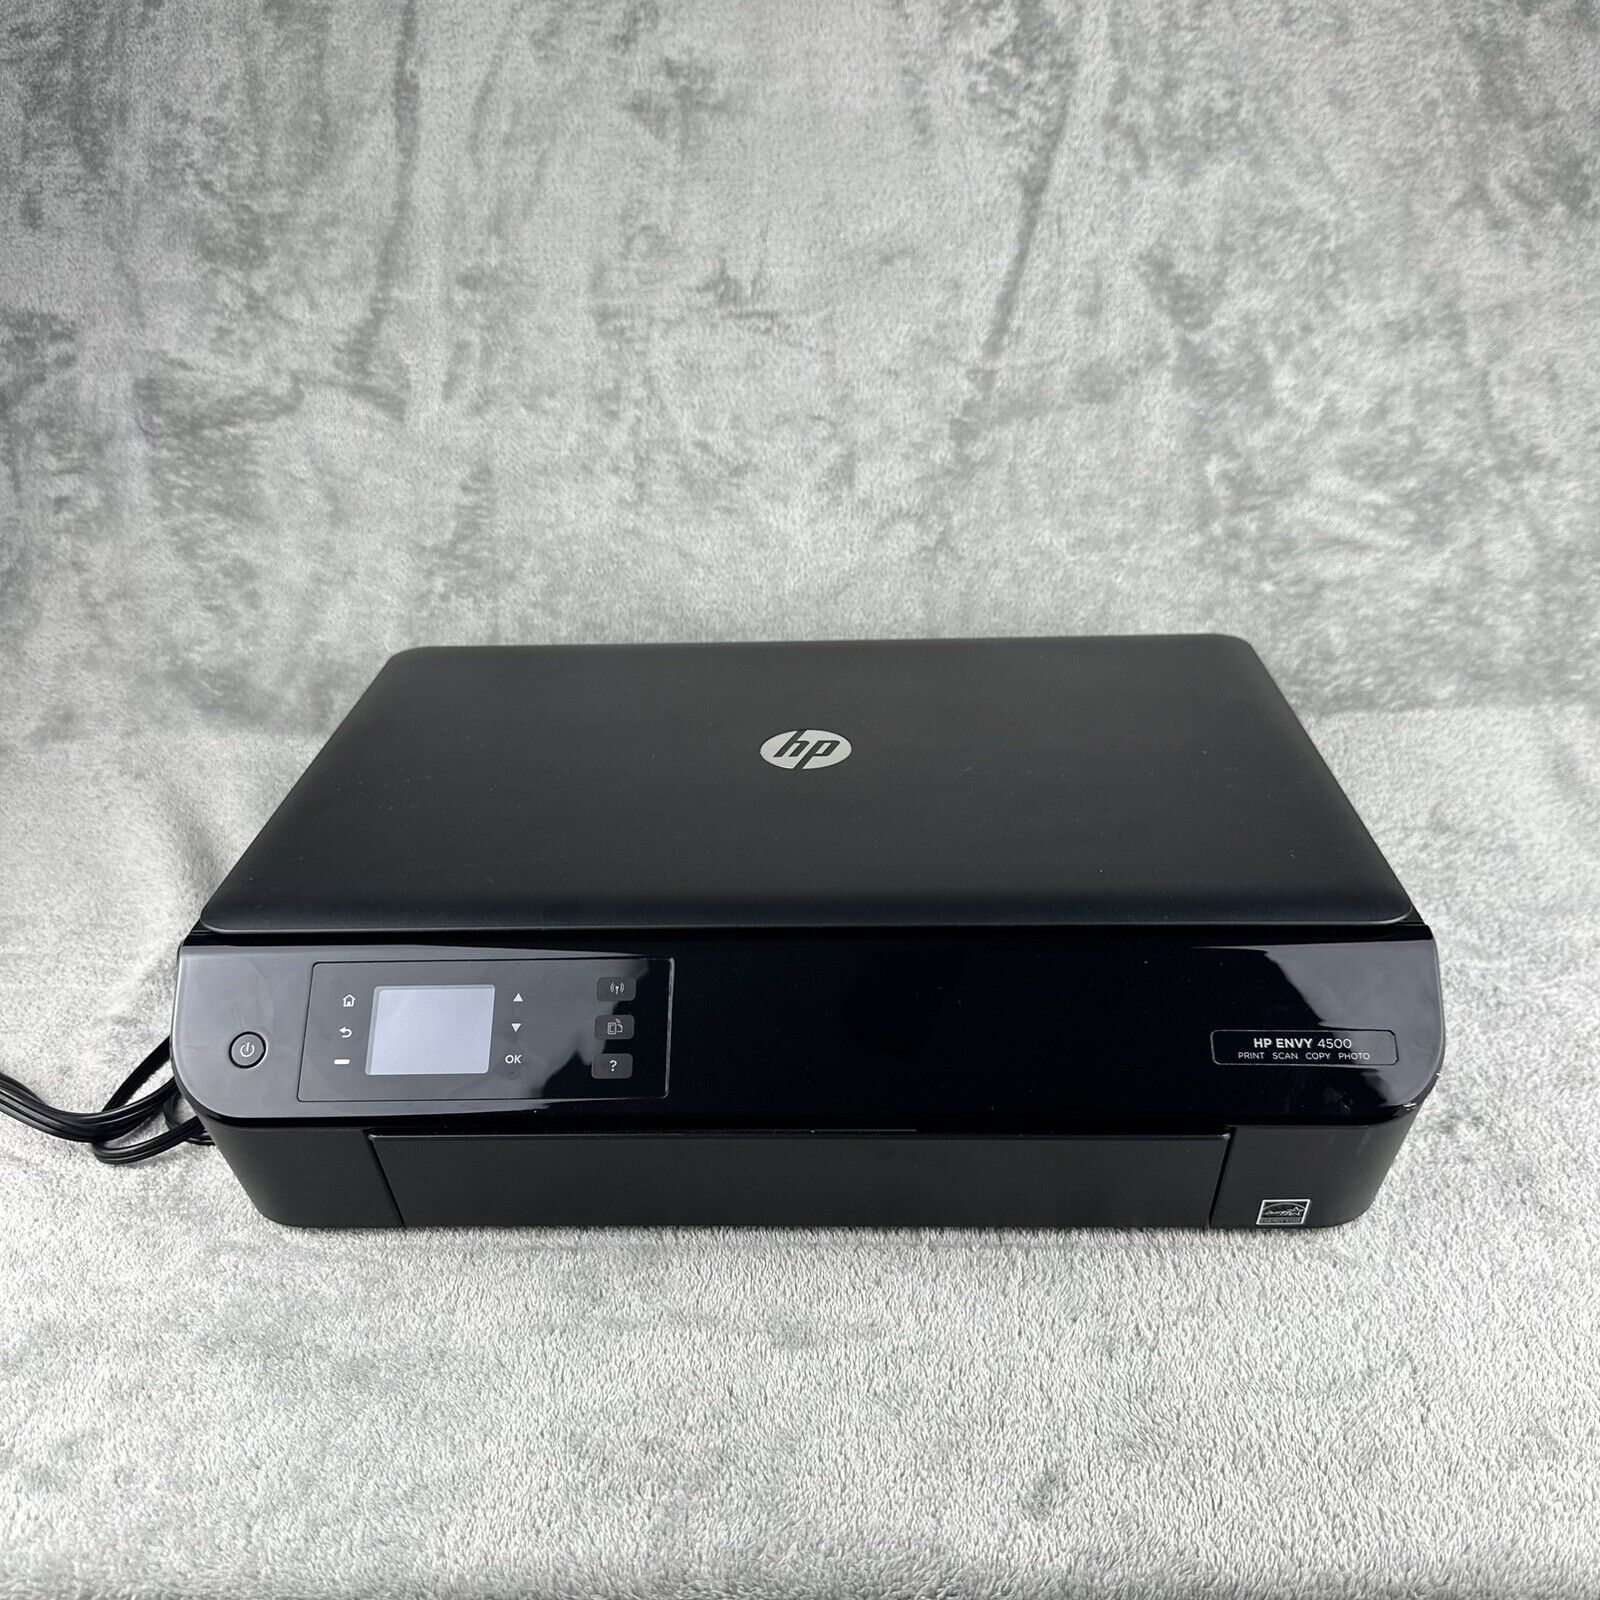 HP Envy 4500 Printer Color Wireless All In One Inkjet Print Scan Copy Photo WiFi